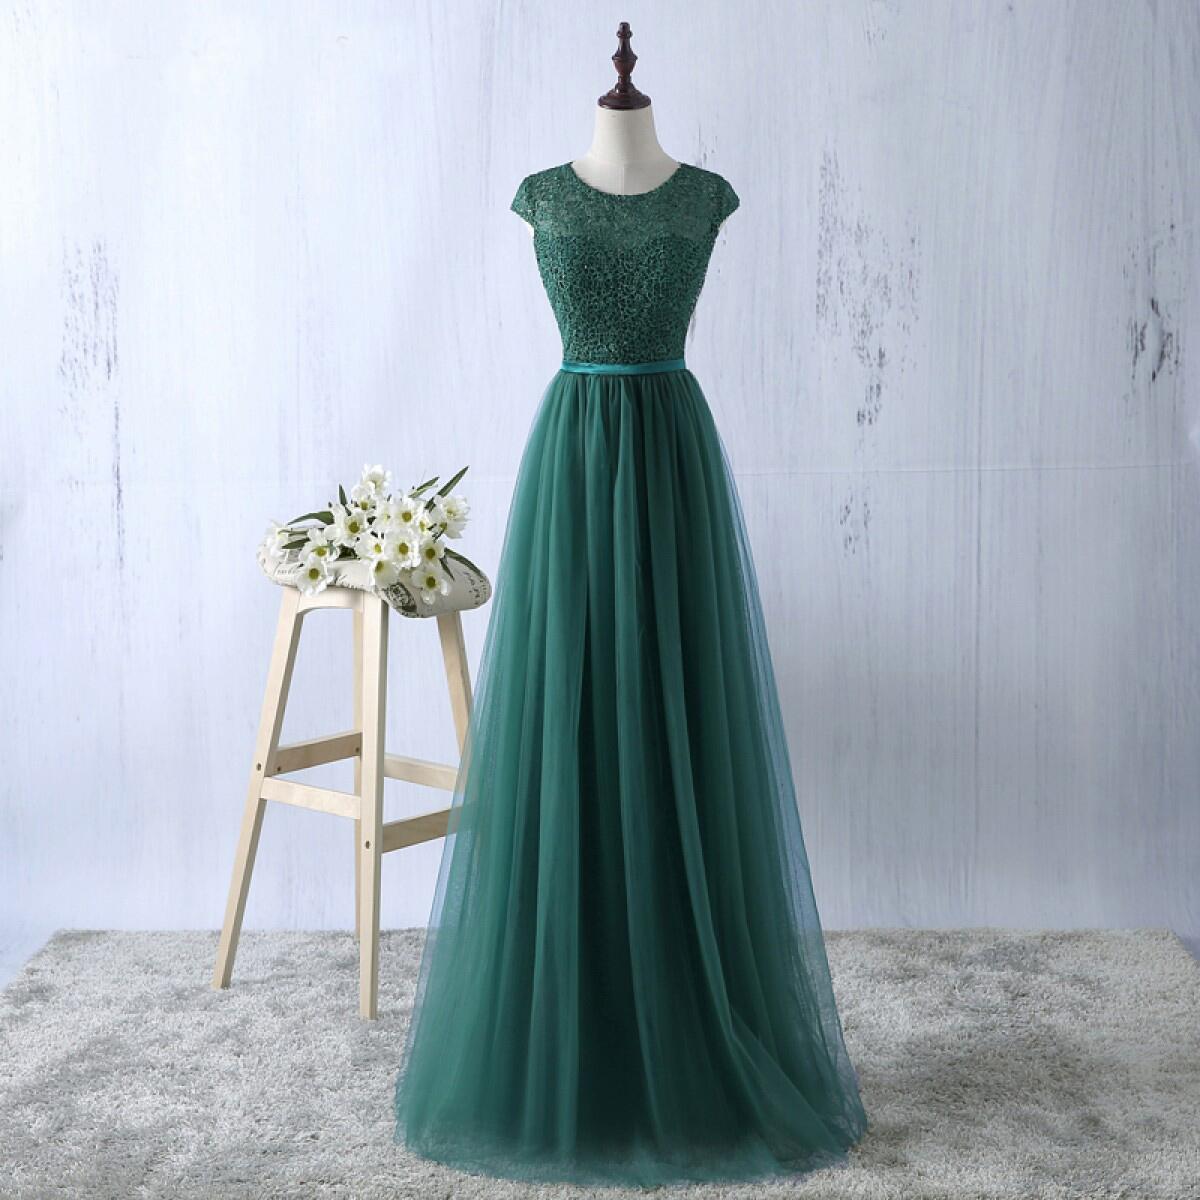 Cap Sleeves Prom Dress Dark Green Evening Dress Tulle Party Dress Formal Bridesmamaid Dress,custom Made